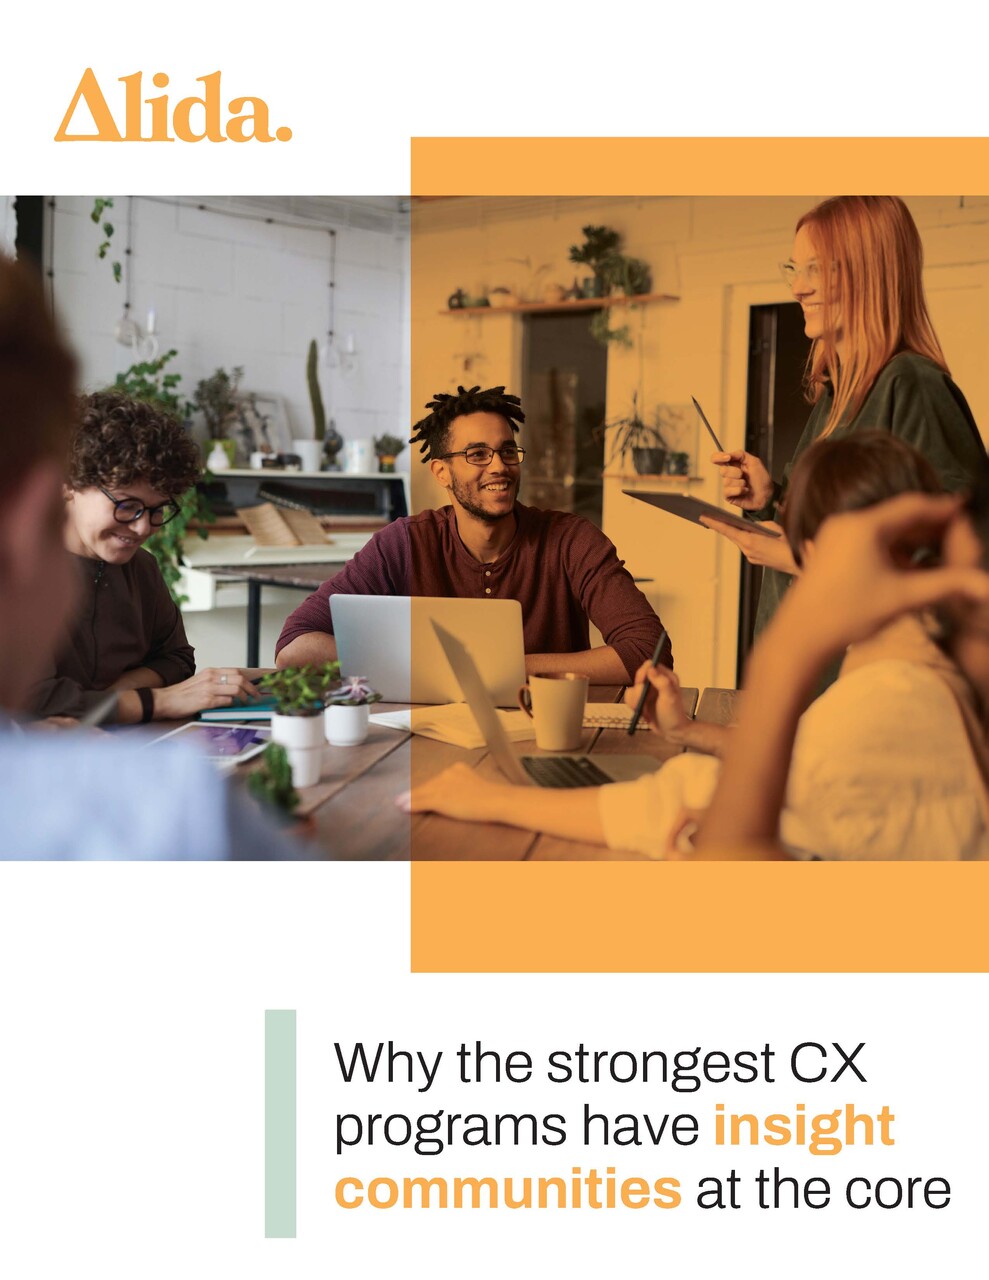 Community-Centered CX